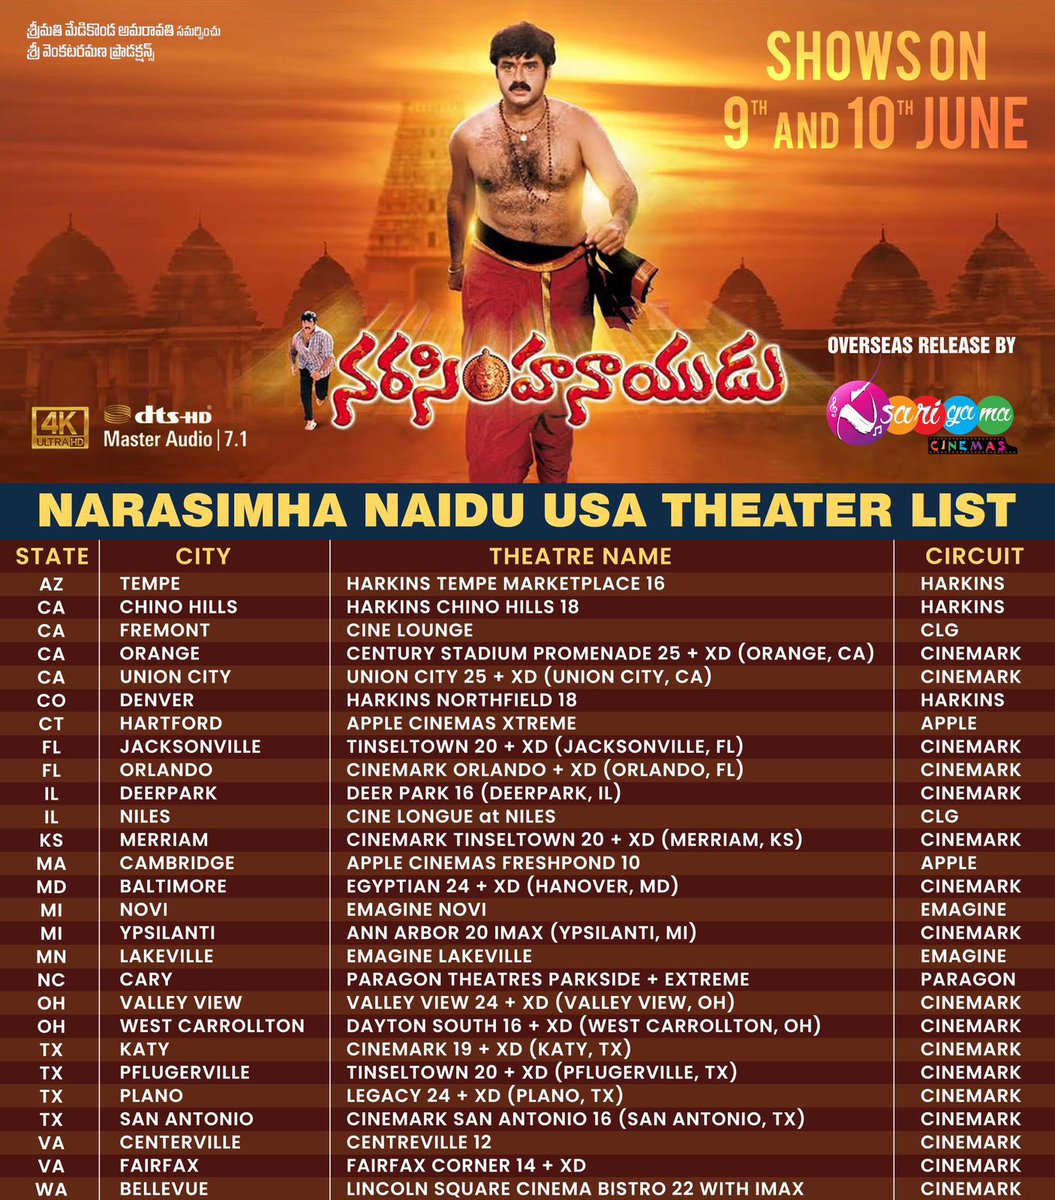 #NarasimhaNaidu USA re-release theatres list out 🔥

#Narasimhanaidu4K Shows in USA on June 9th and 10th on occasion of #NandamuriBalakrishna garu birthday!

Overseas release by @sarigamacinemas